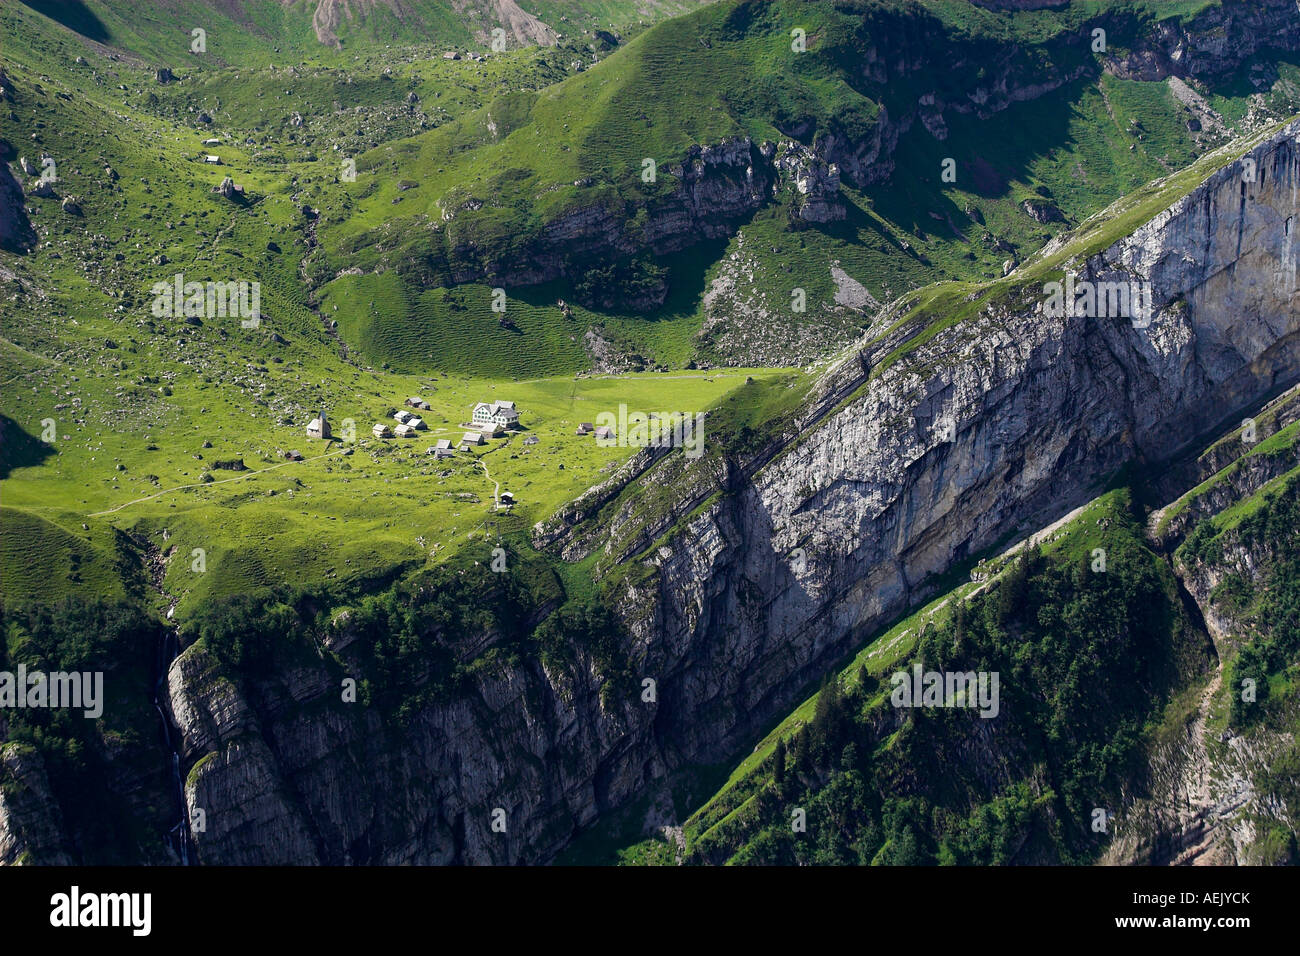 The Meglisalp in the Alpsteingebirge Canton Appenzell, Switzerland Stock Photo